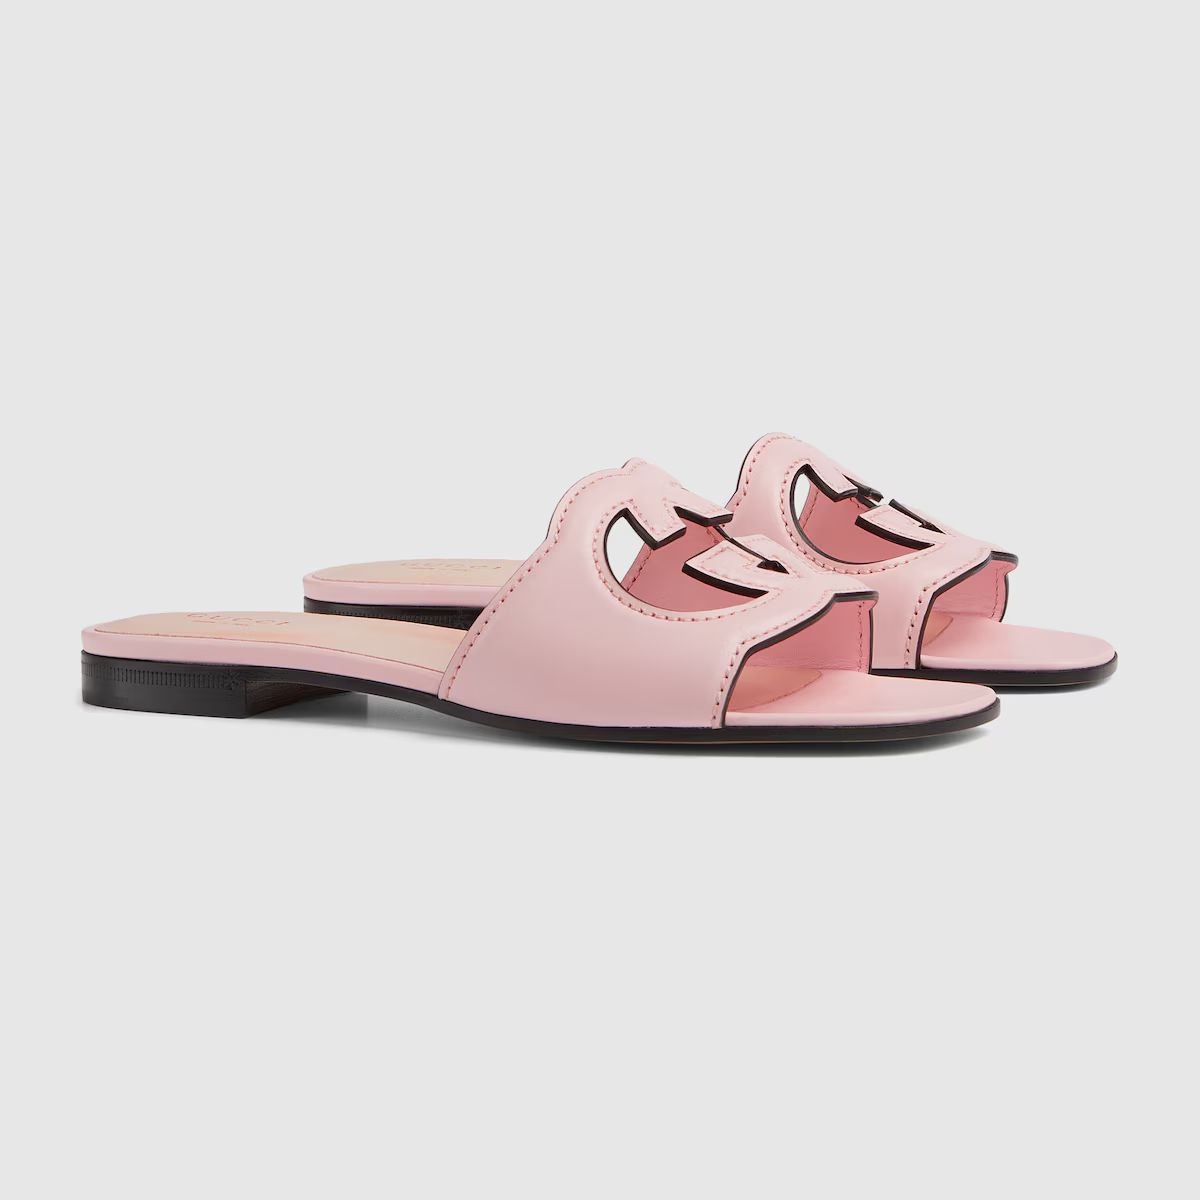 Gucci Women's Interlocking G cut-out sandal | Gucci (US)